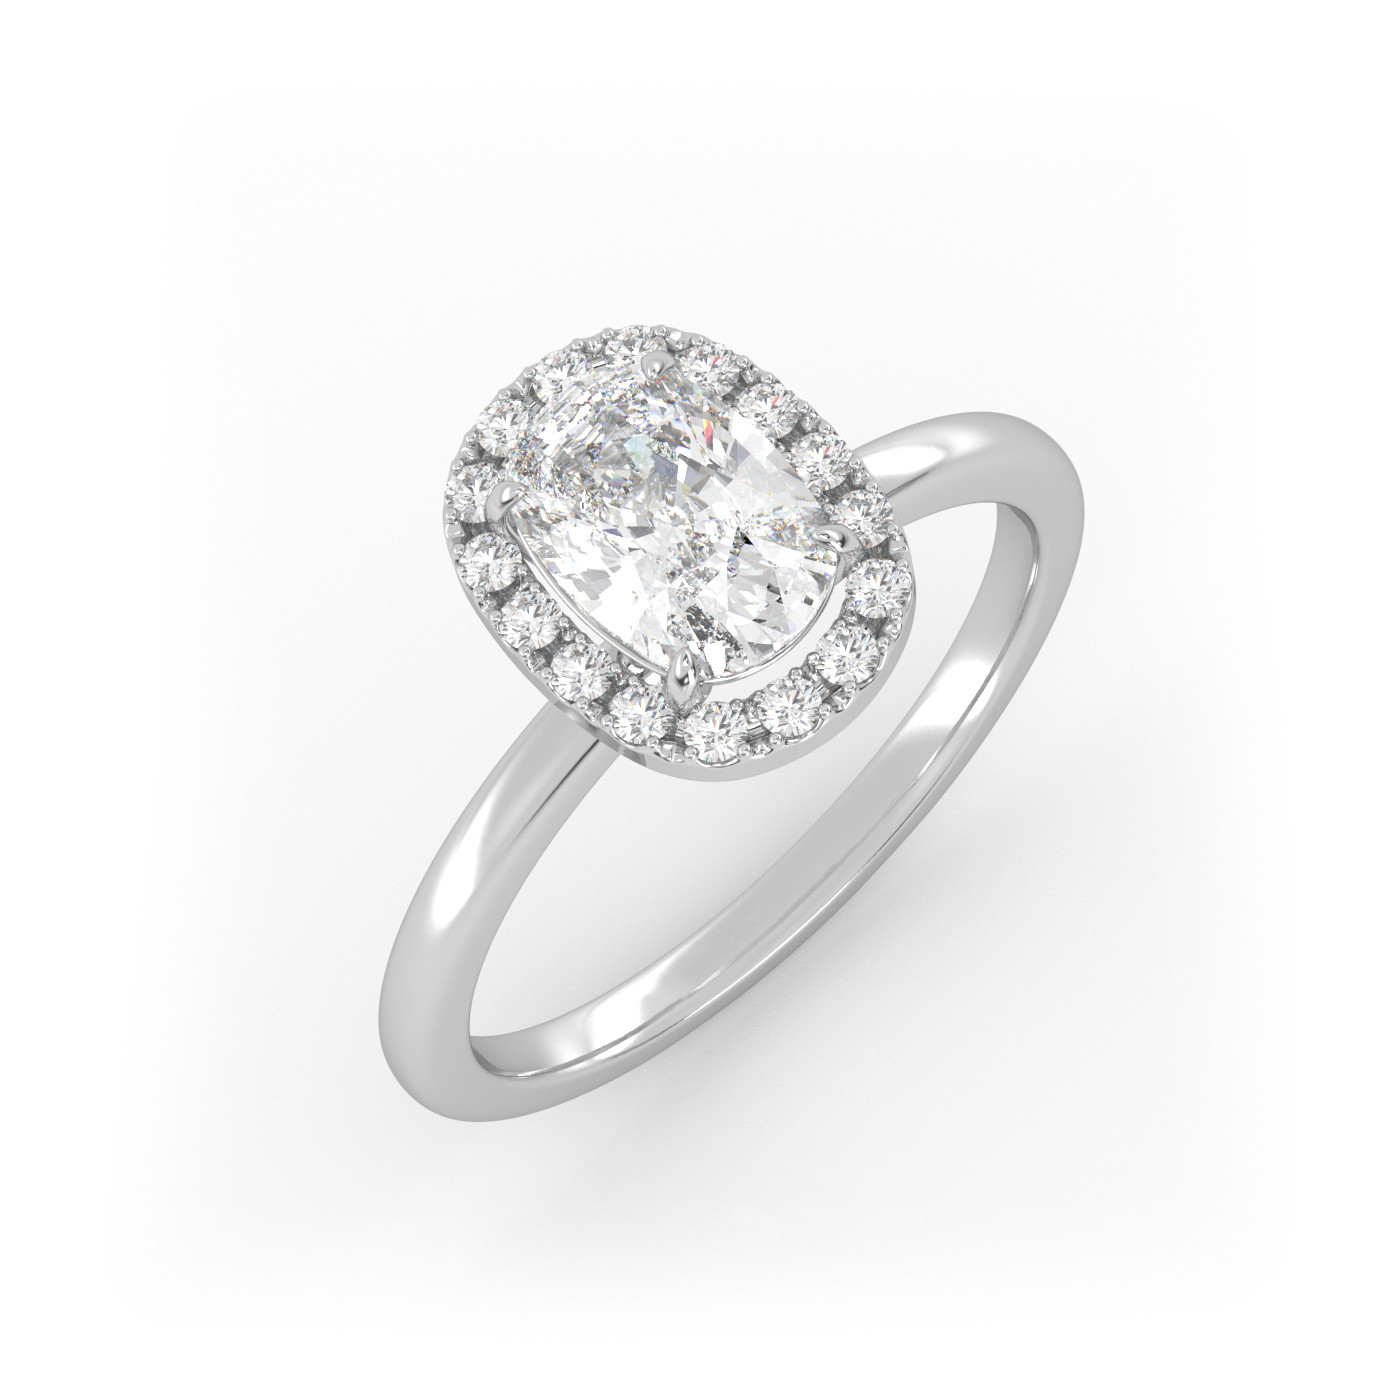 18K WHITE GOLD Elongated Cushion Cut Diamond Ring With Halo Style